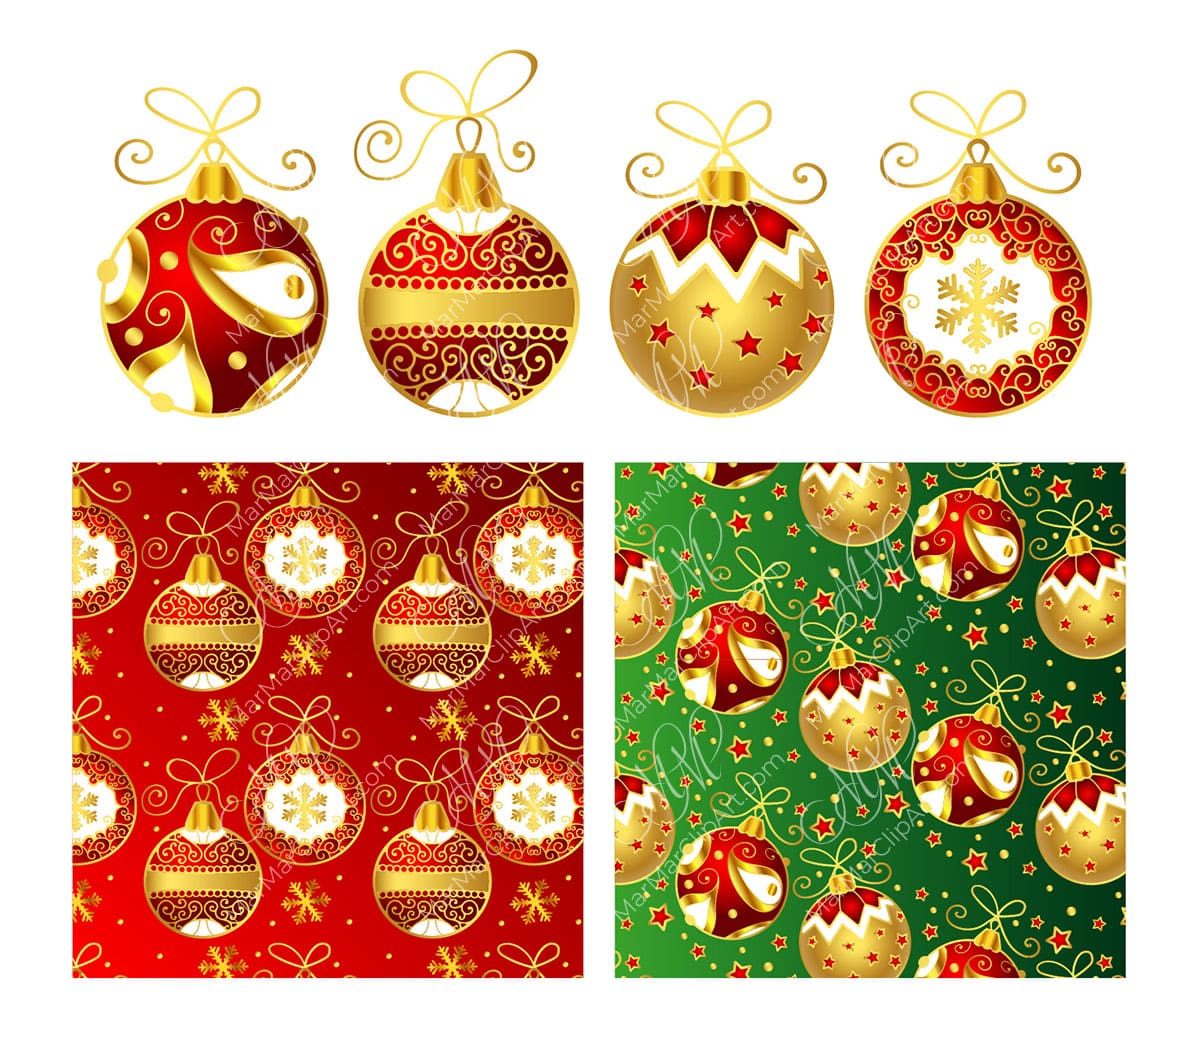 Set of 4 Christmas balls and seamless patterns